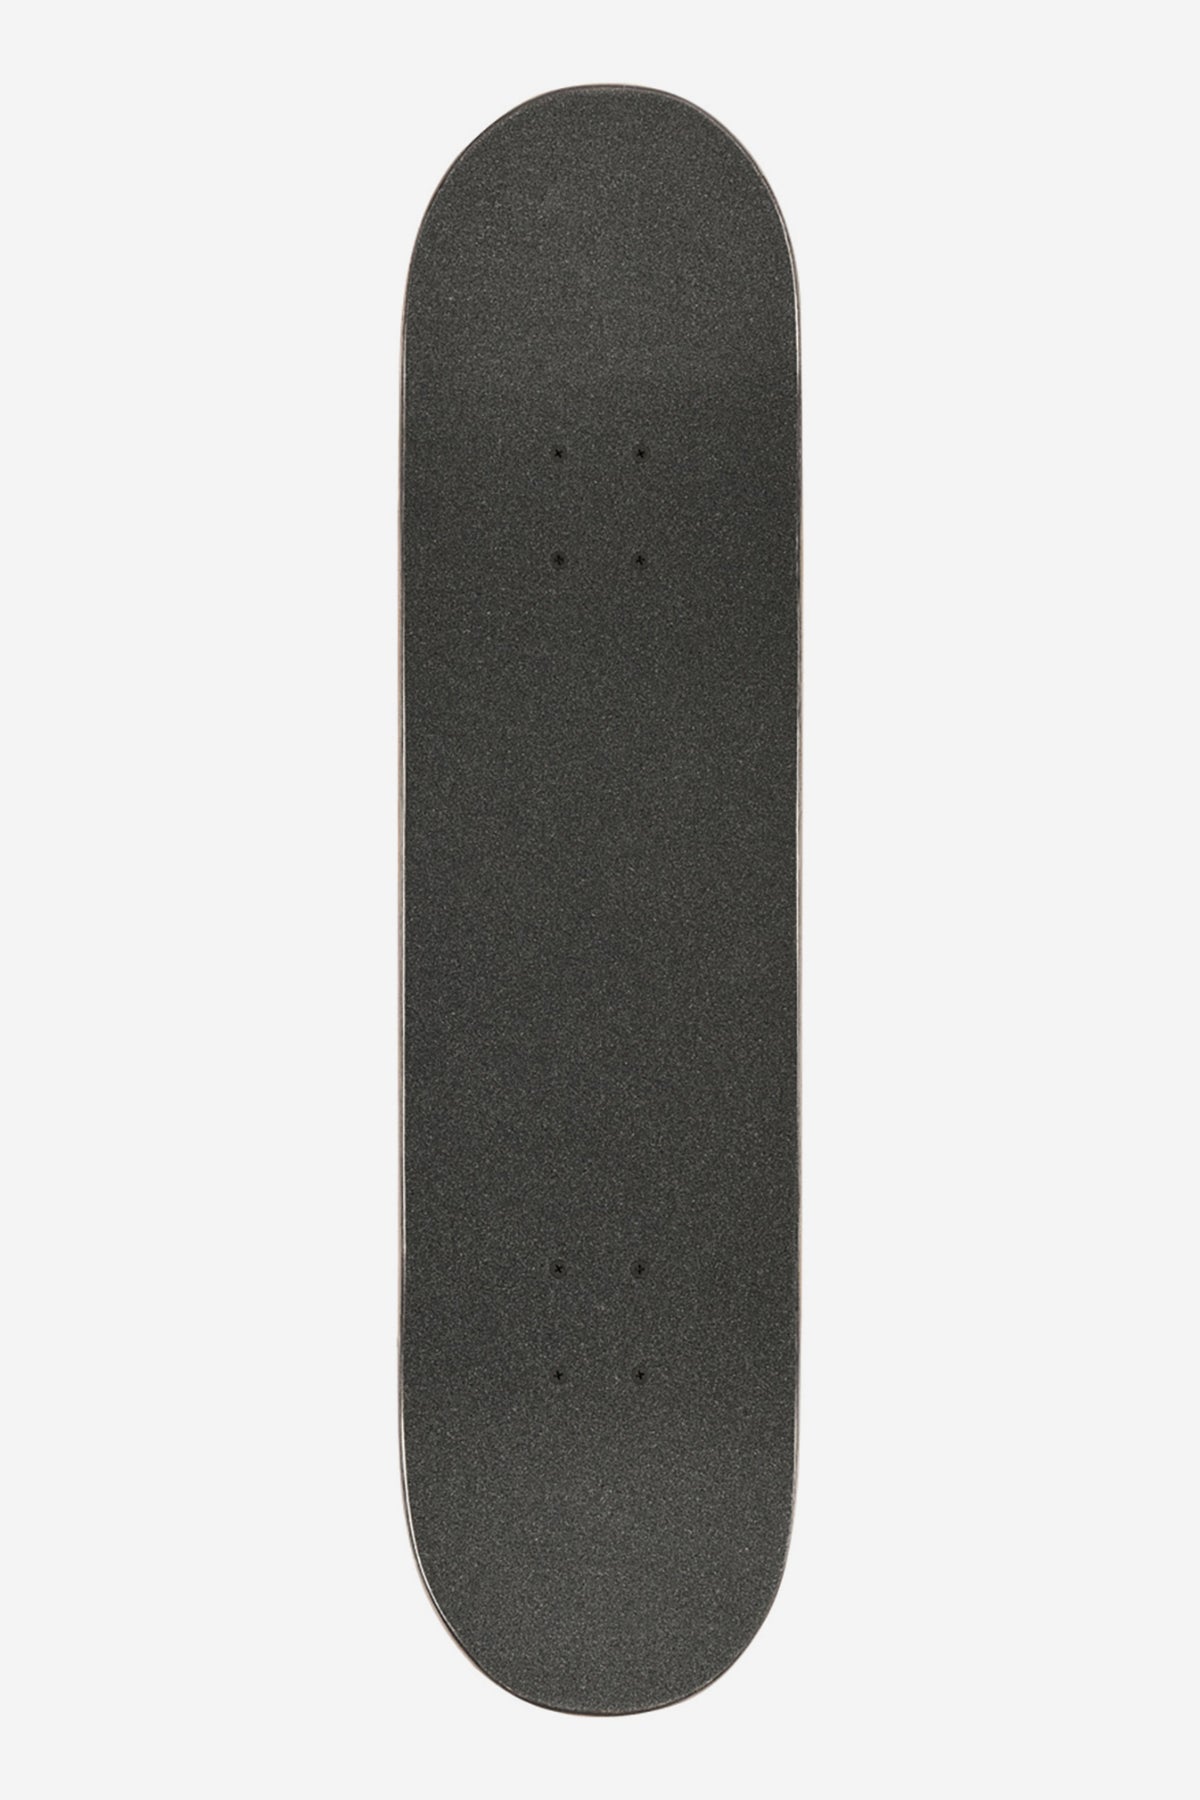 Goodstock - Sahara- 8.375" Complete Skateboard